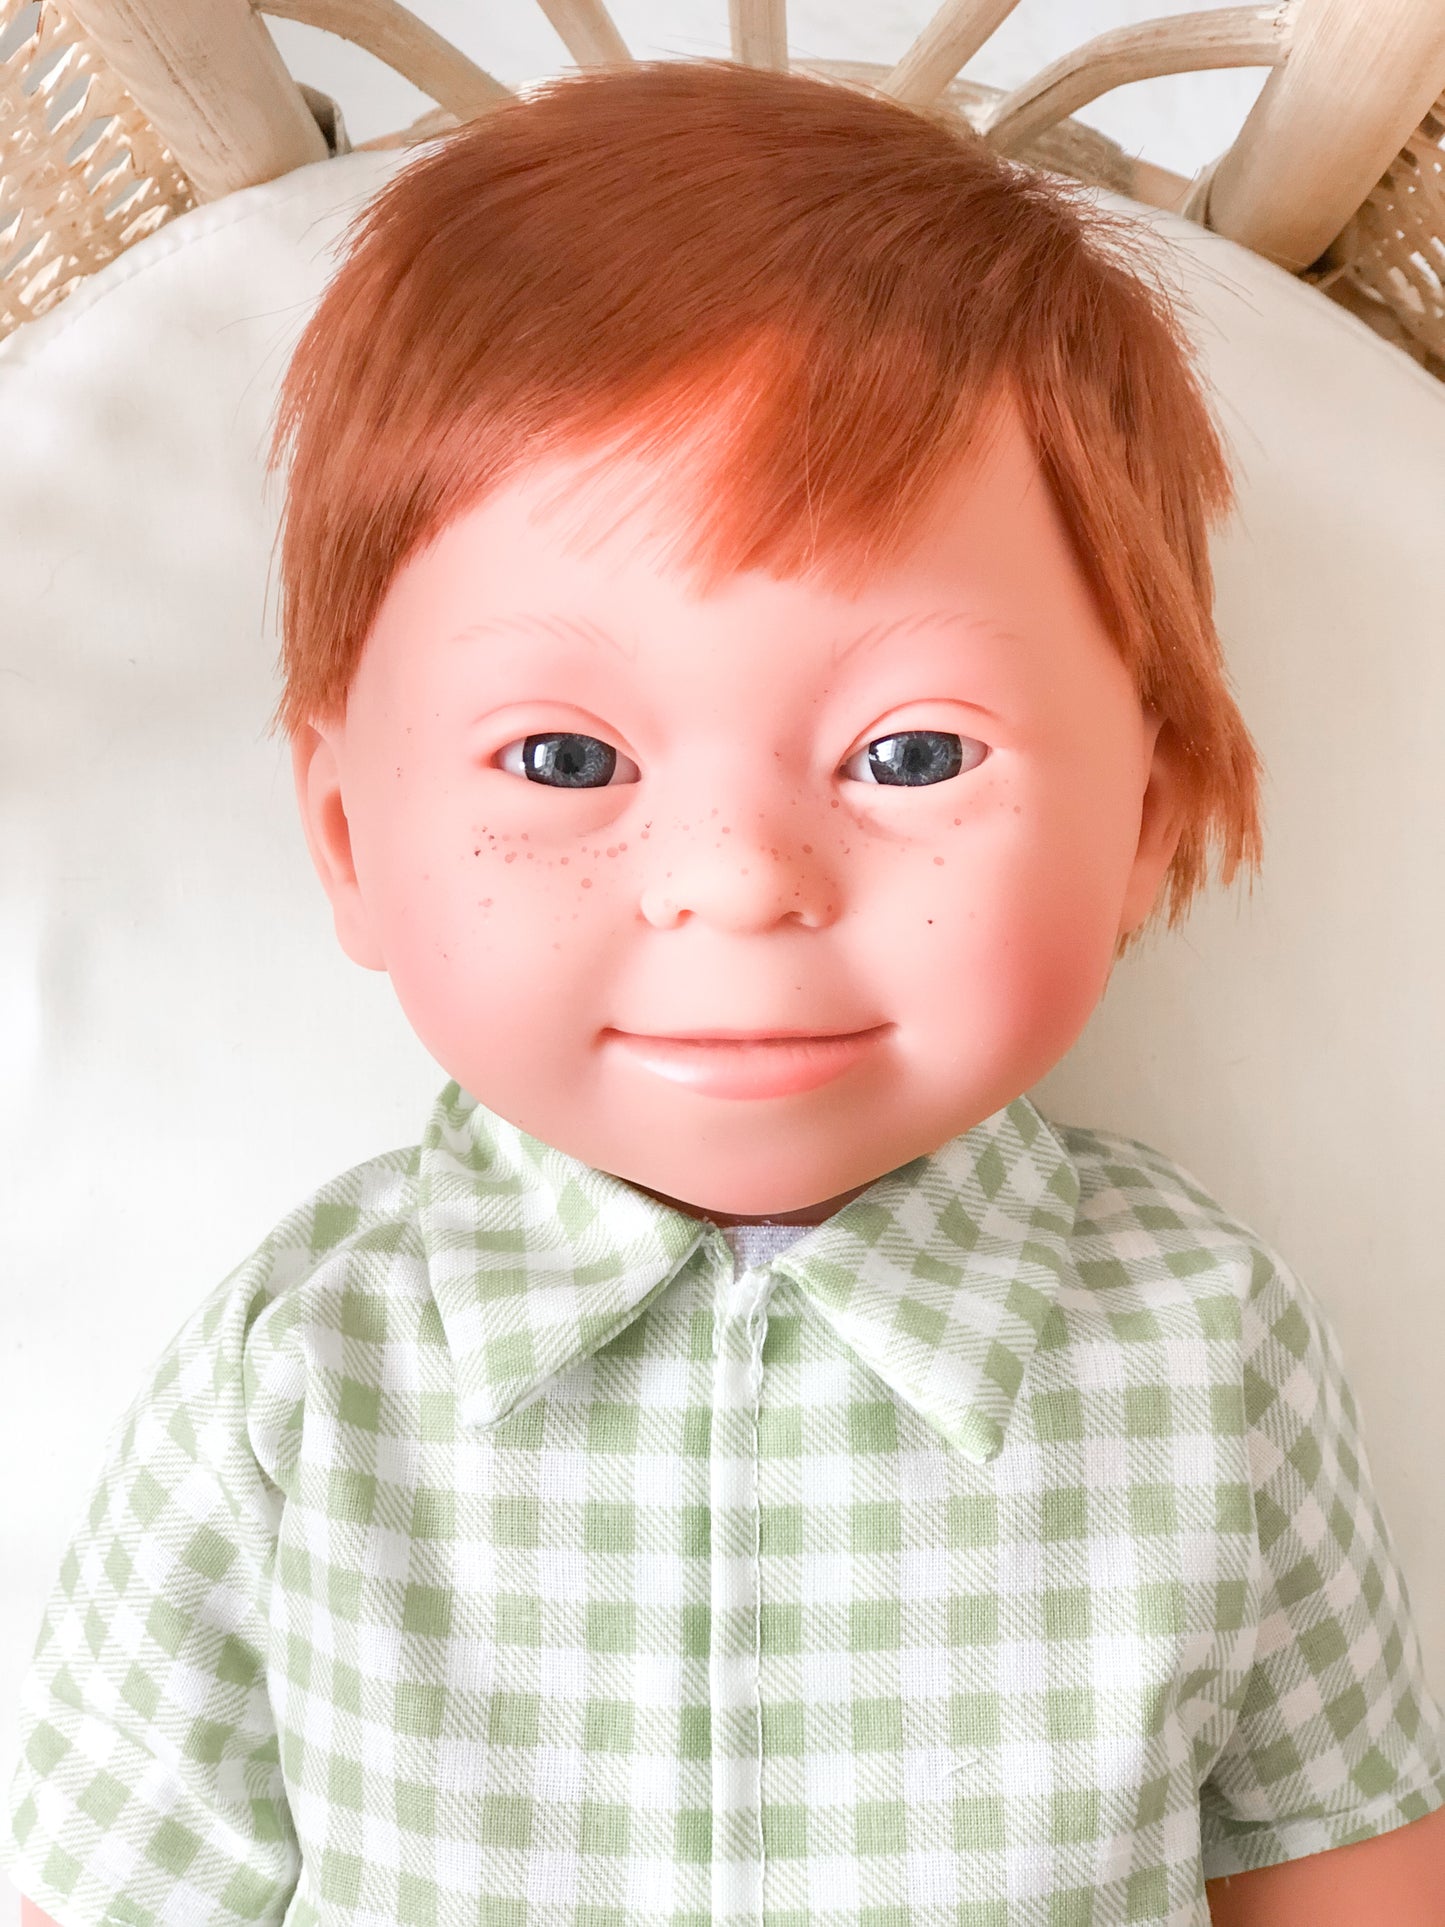 Killian - Boy Doll with Down Syndrome